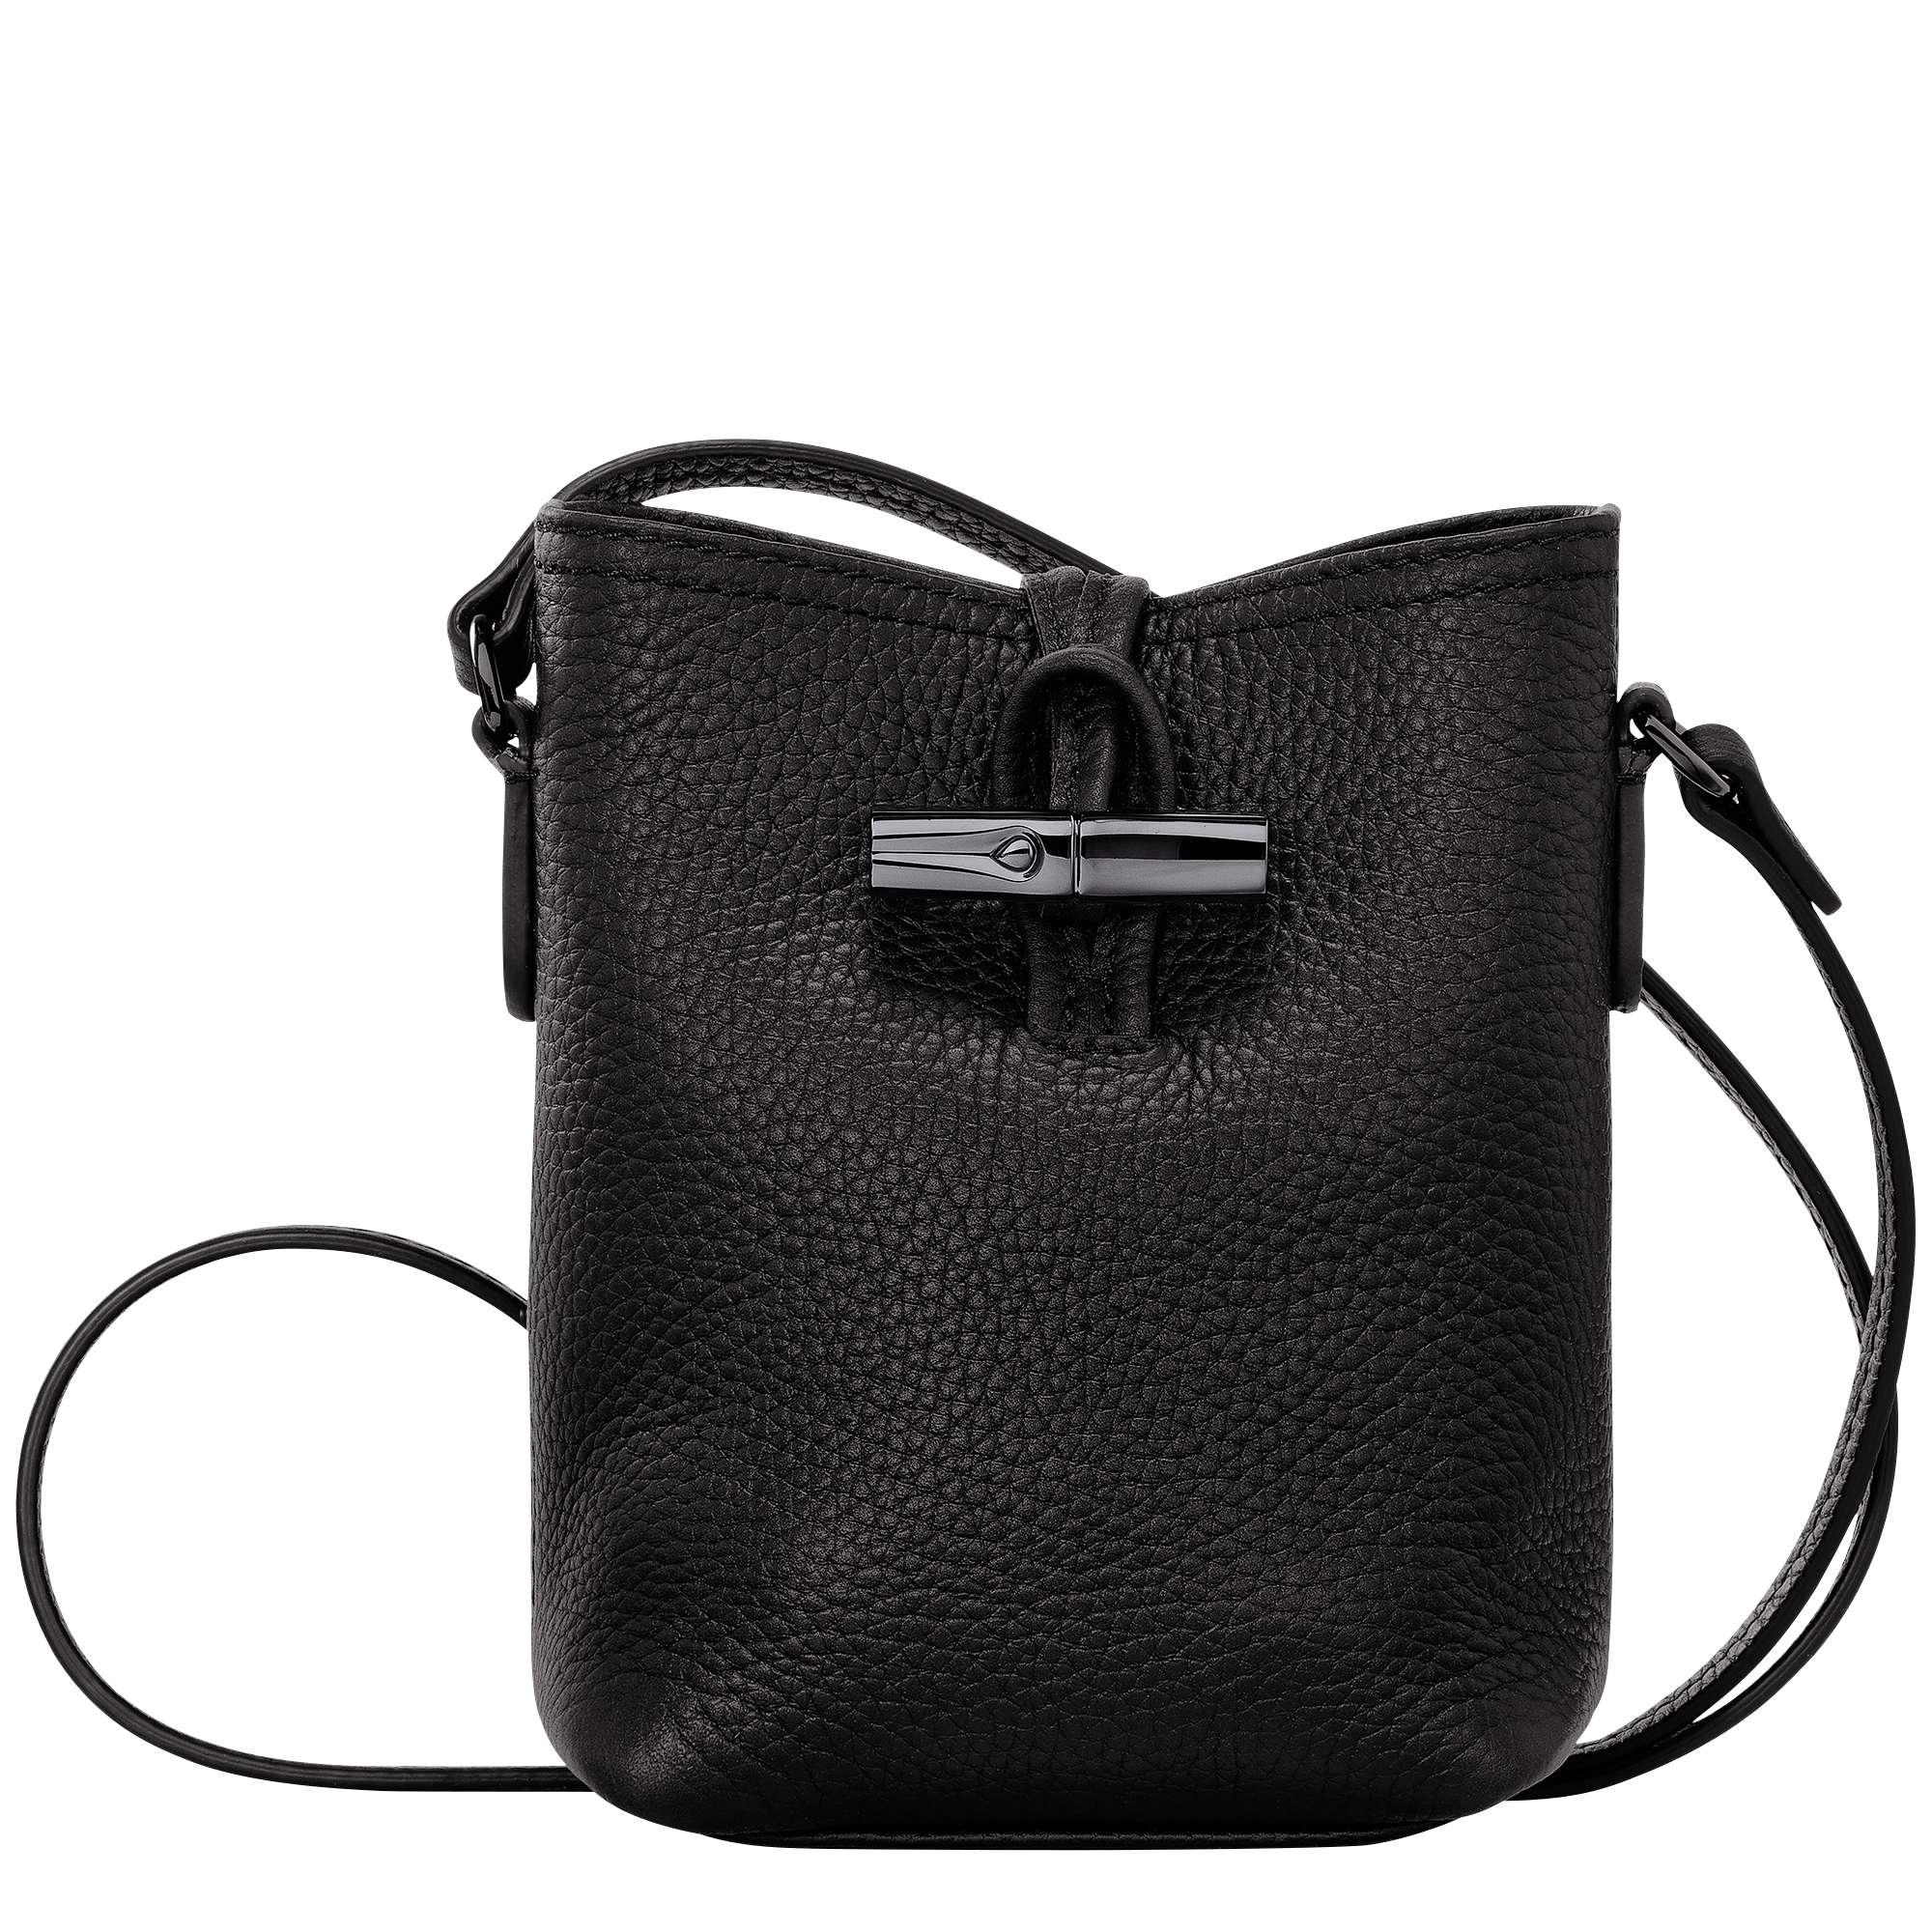 3359 LONGCHAMP Roseau Essential Small Leather Bucket Bag BLACK